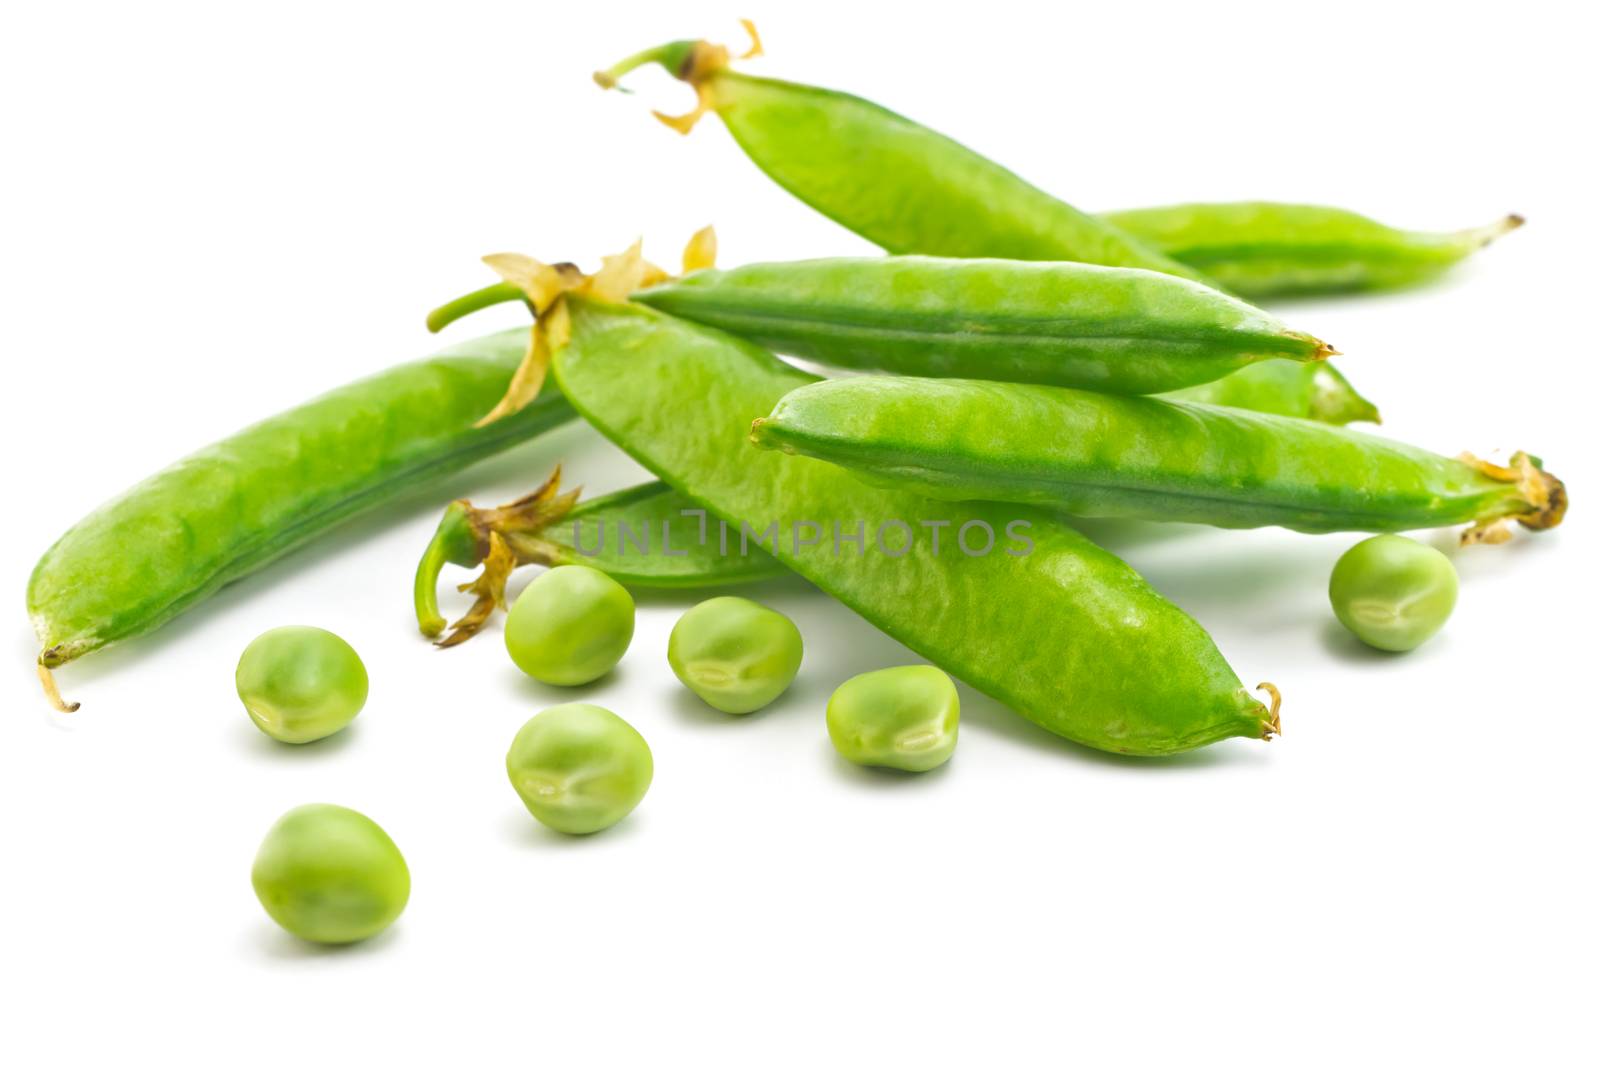 green peas by pilotL39